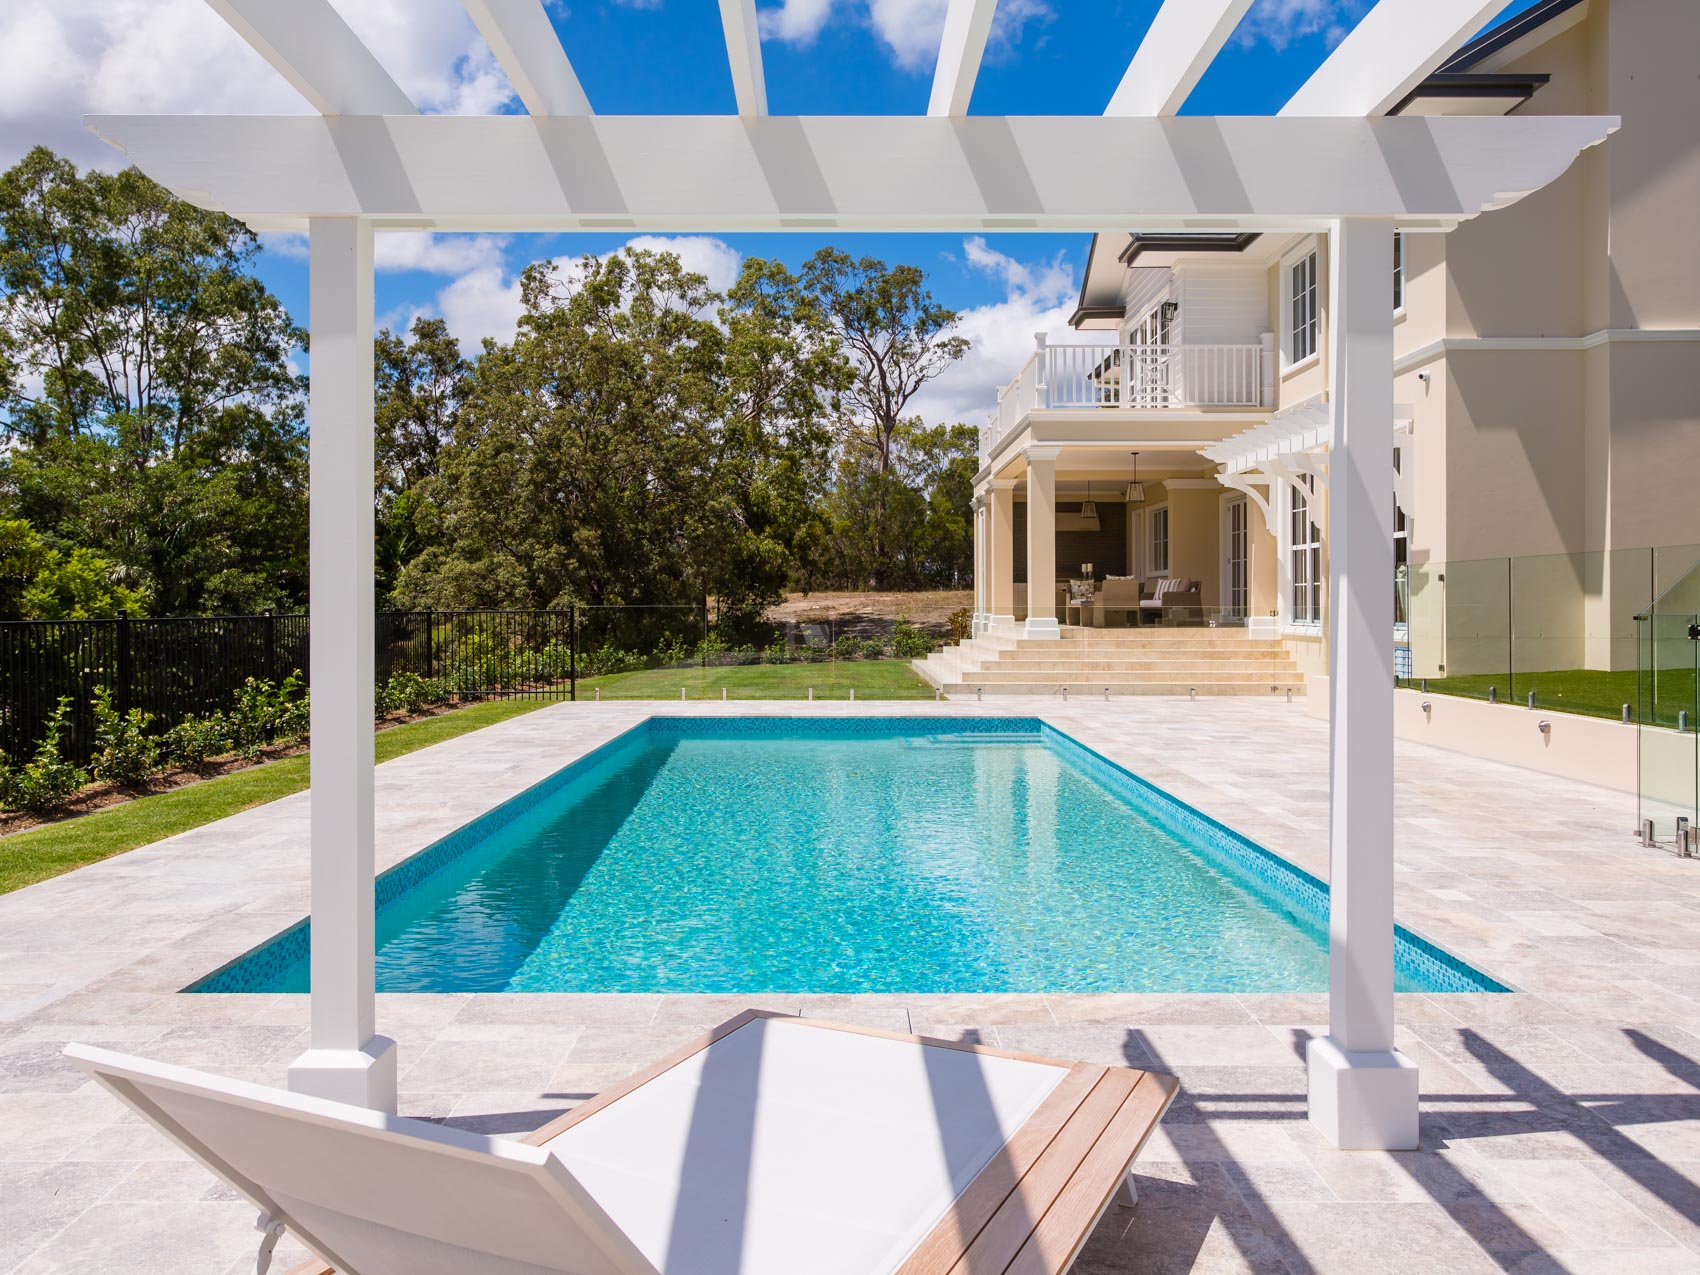 Featured image for “Hamptons Inspiration in Jabiru Estate”